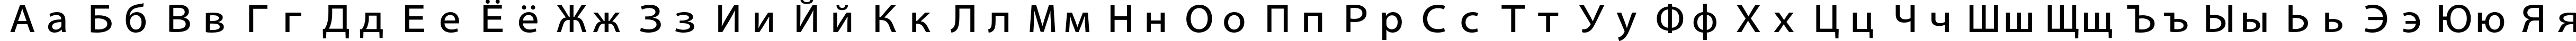 Пример написания русского алфавита шрифтом Adobe Heiti Std R